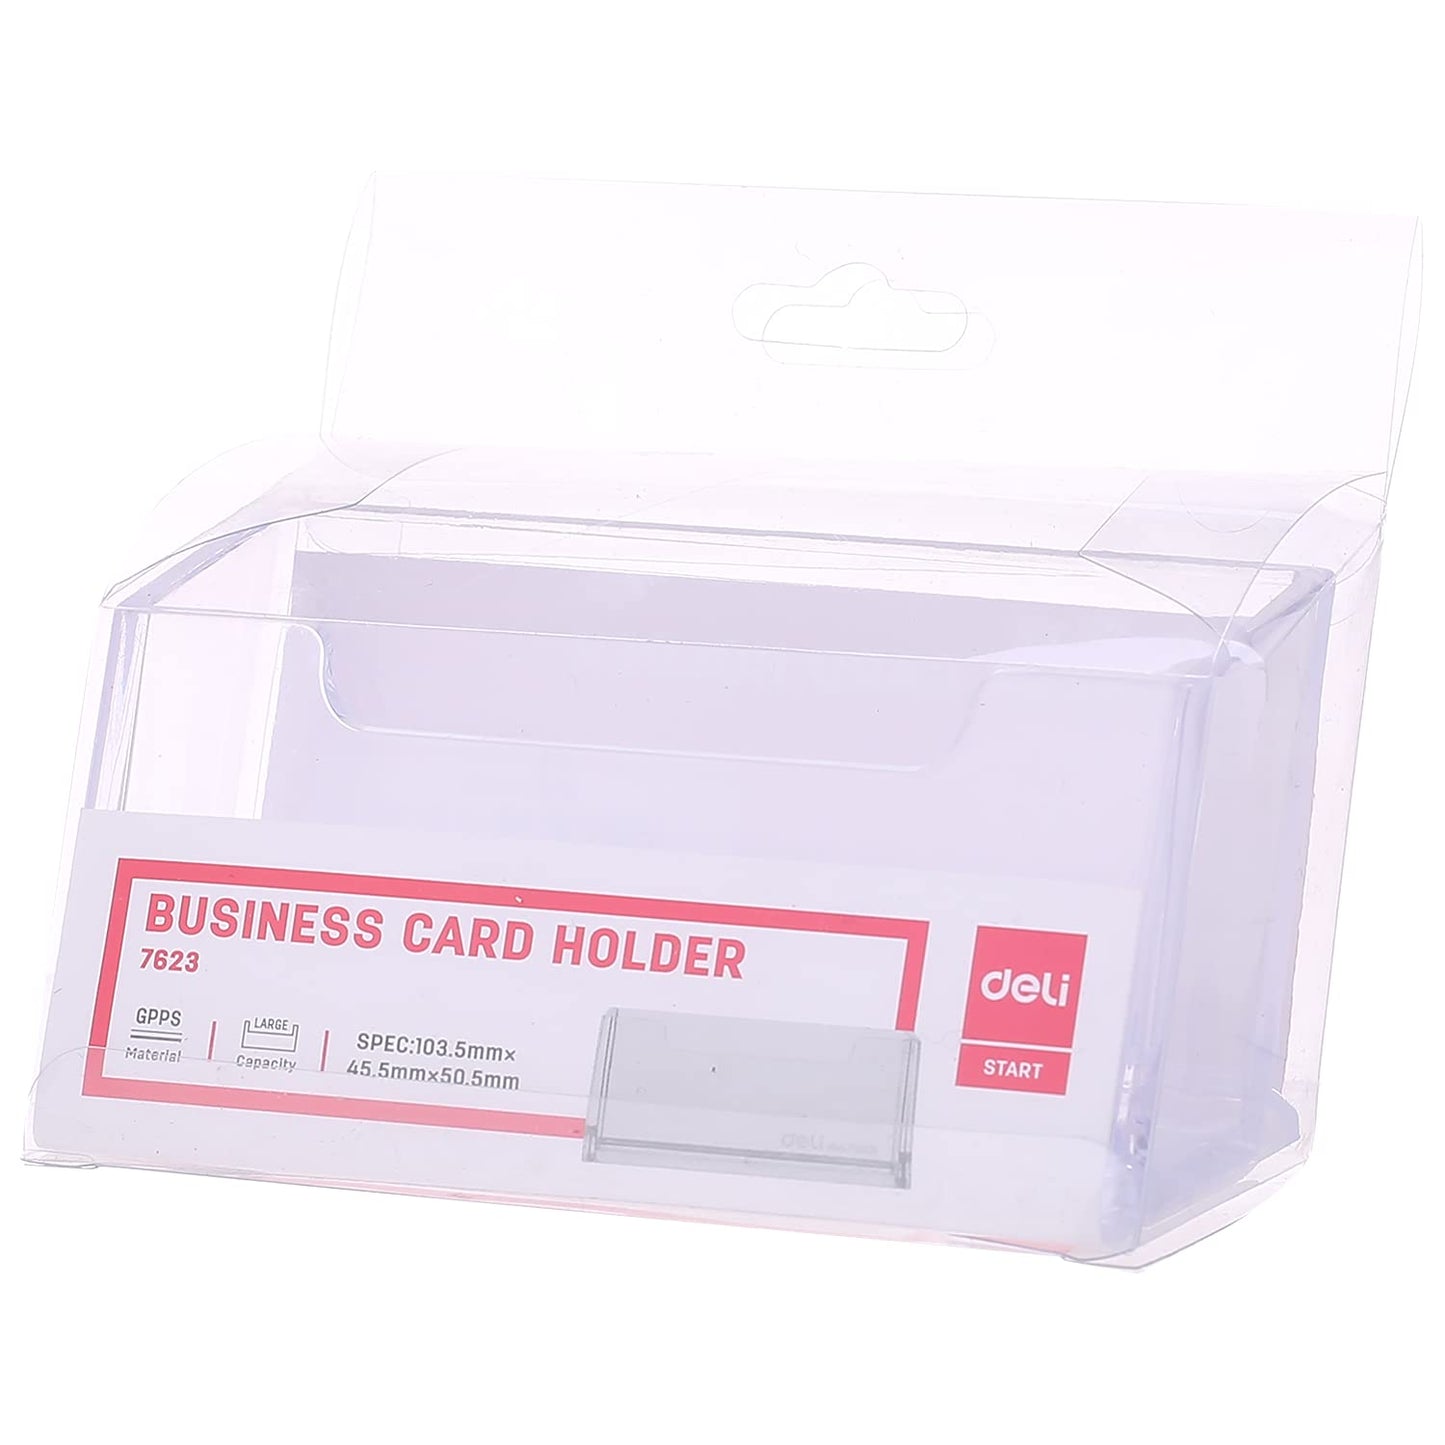 Deli W7623 Name Card Holder, Transparent, Pack of 1